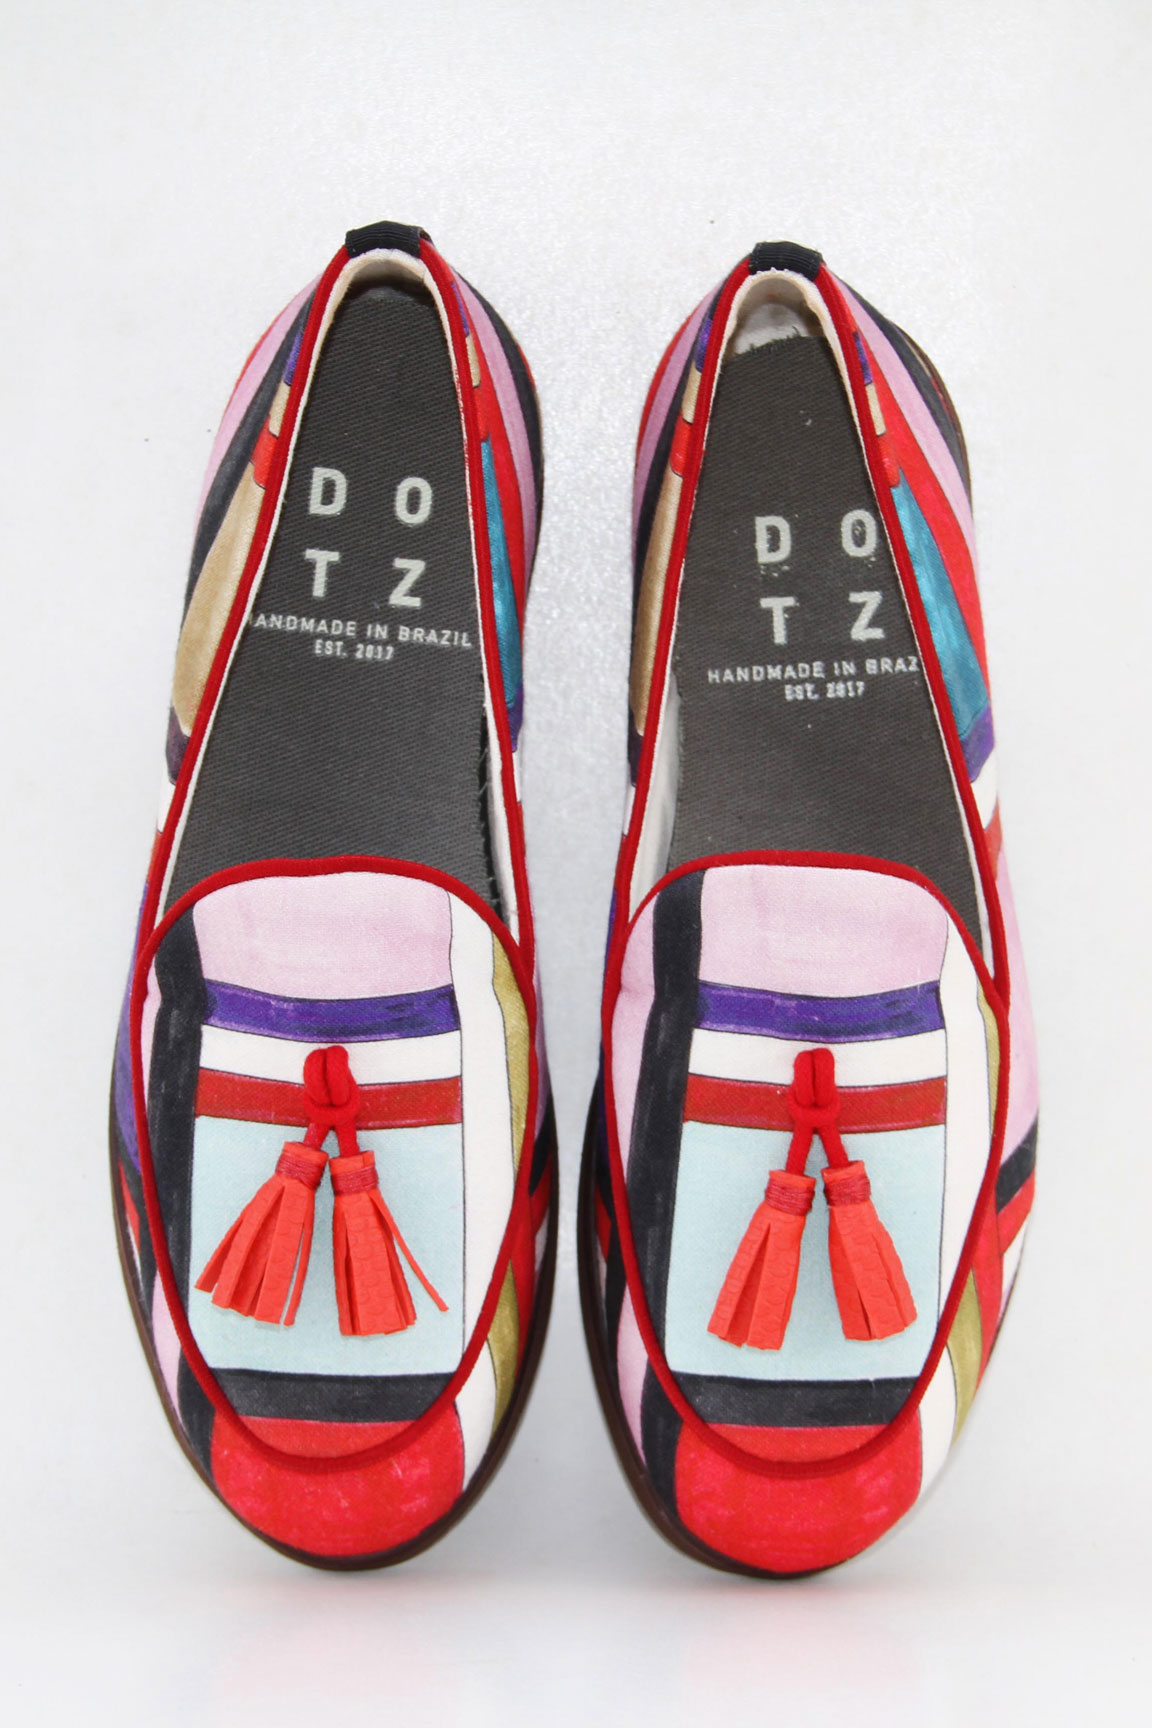 Dotz-scarpe-donna-bandiere-1